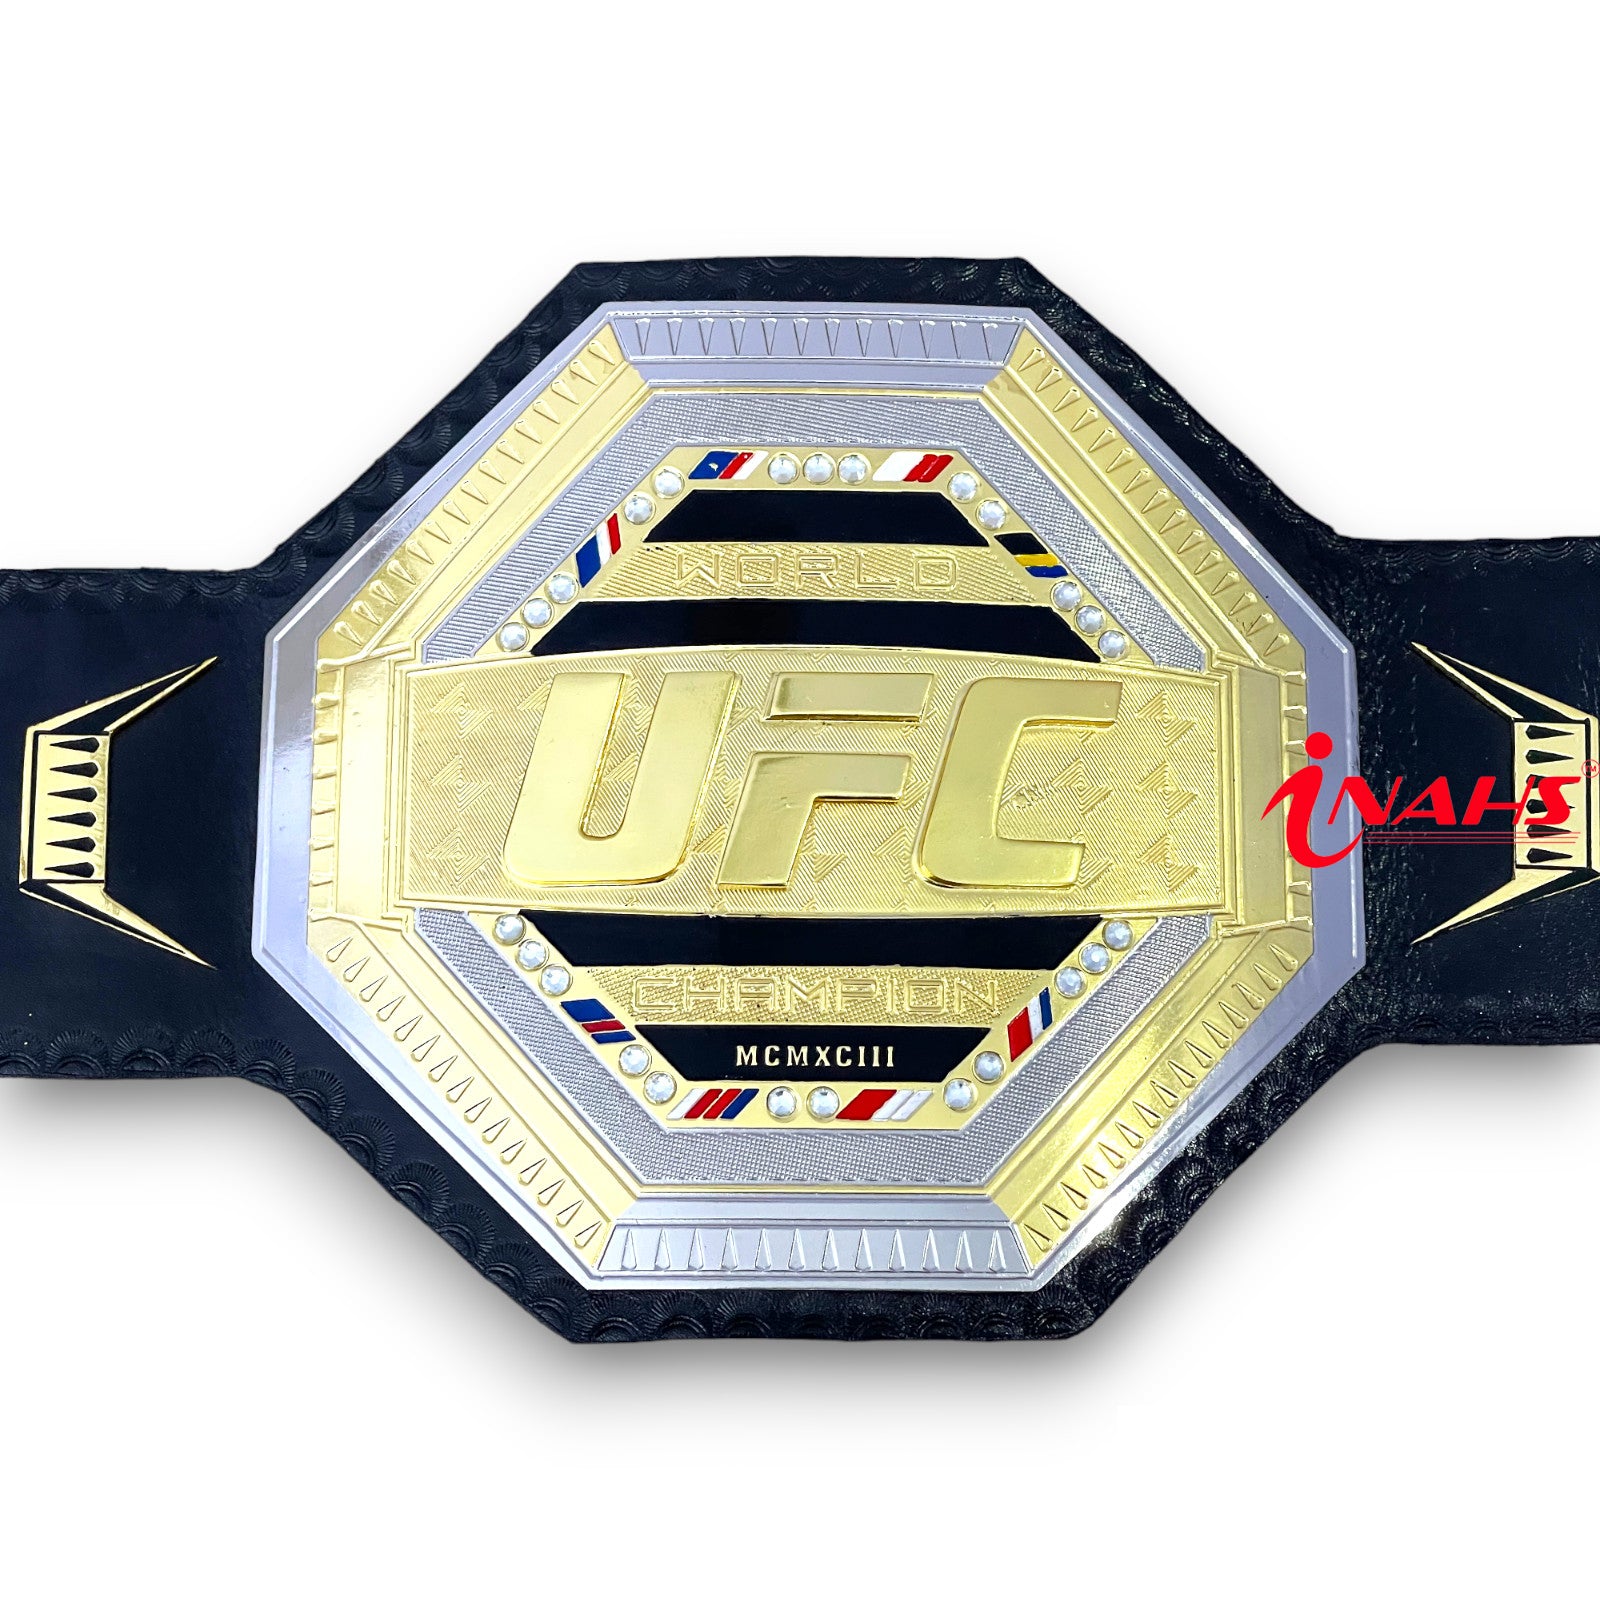 UFC Legacy World Championship Wrestling Heavyweight Fighting Belt